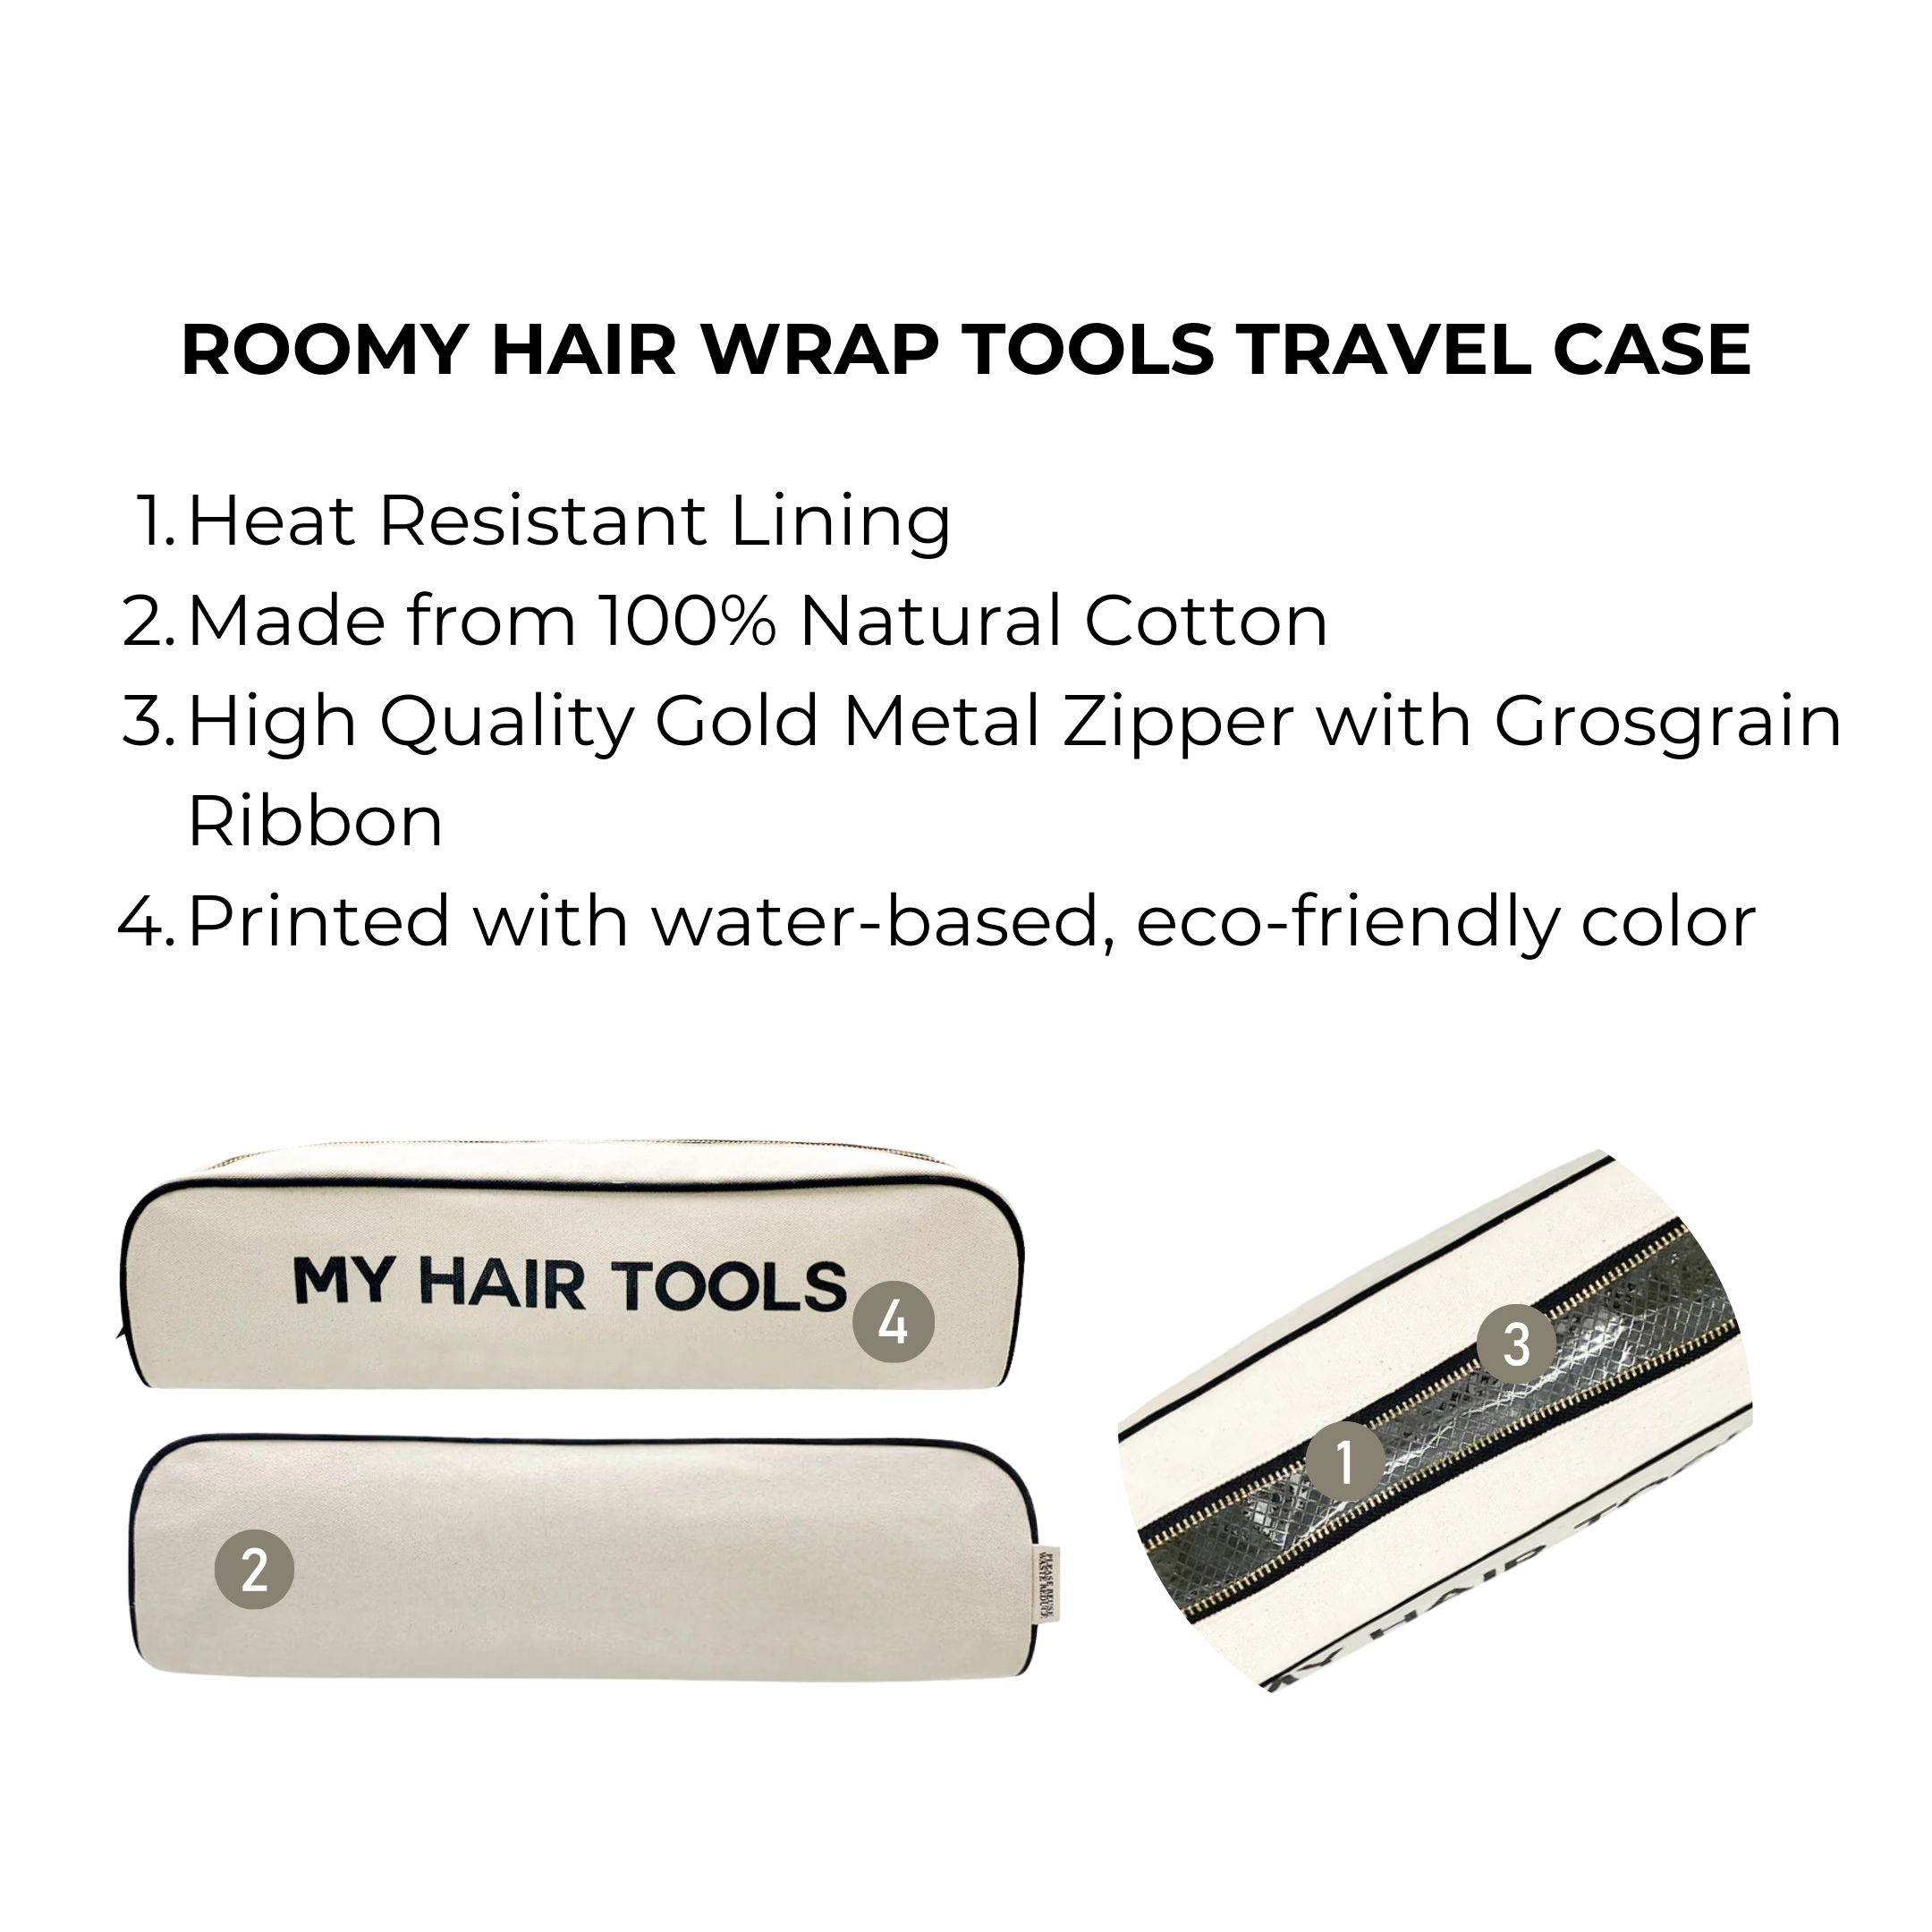 Roomy Hair Wrap Tools Travel Case, Cream | Bag-all